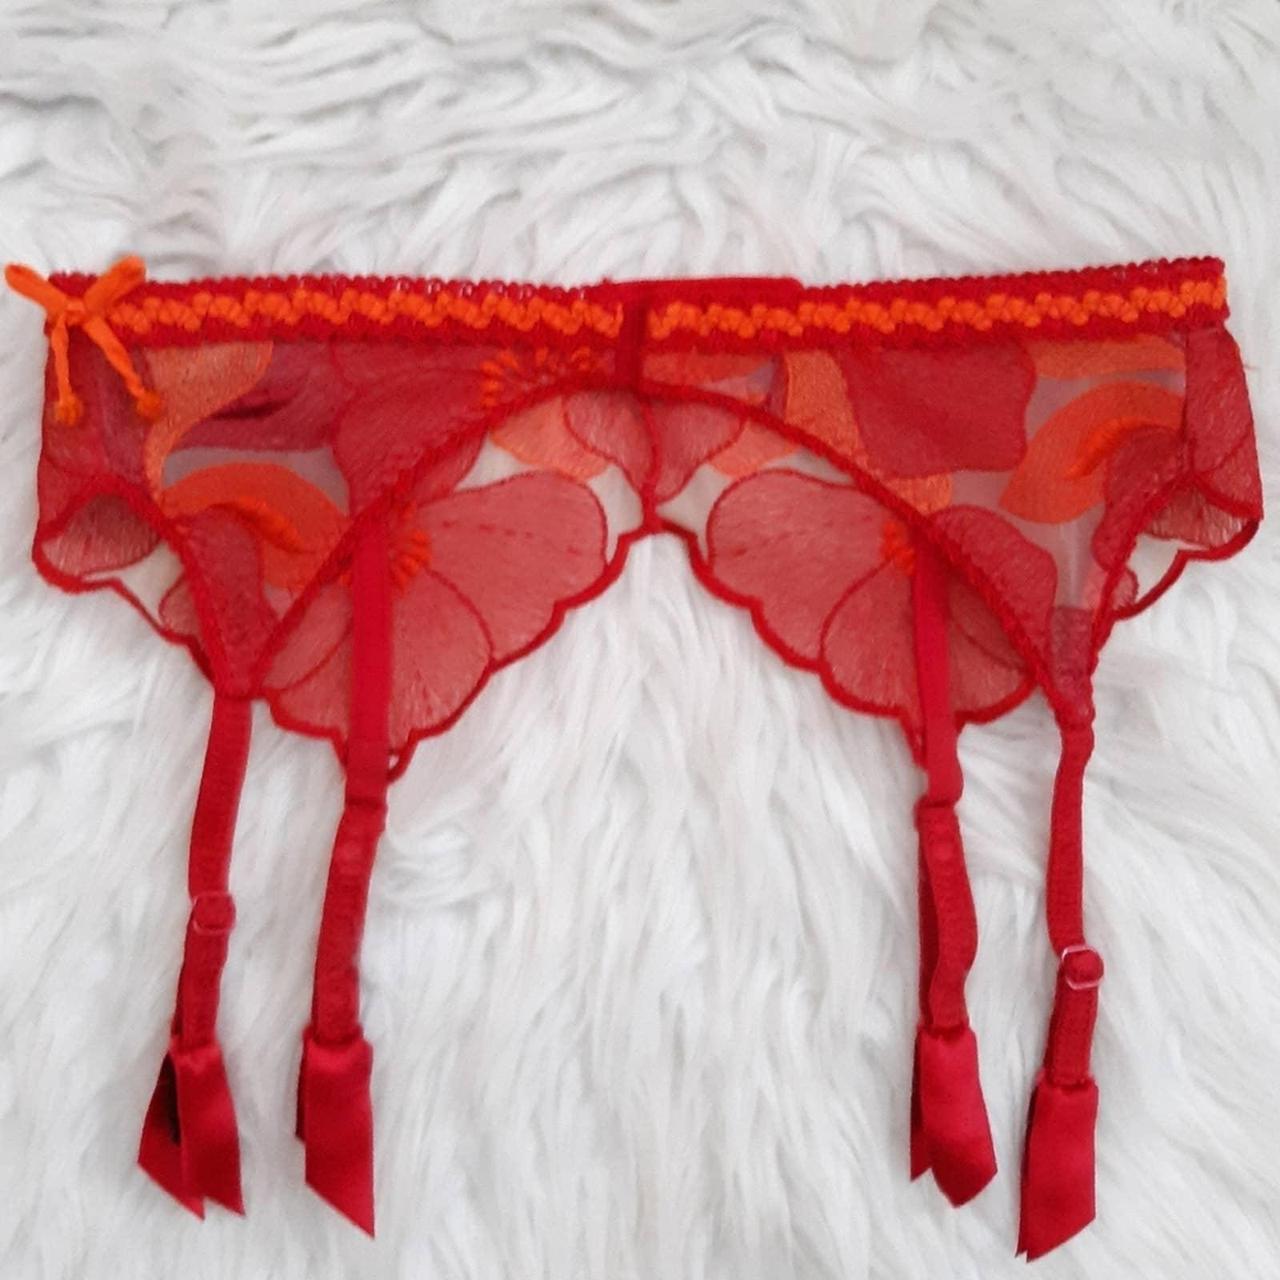 Aubade Women's Red and Orange Panties (3)